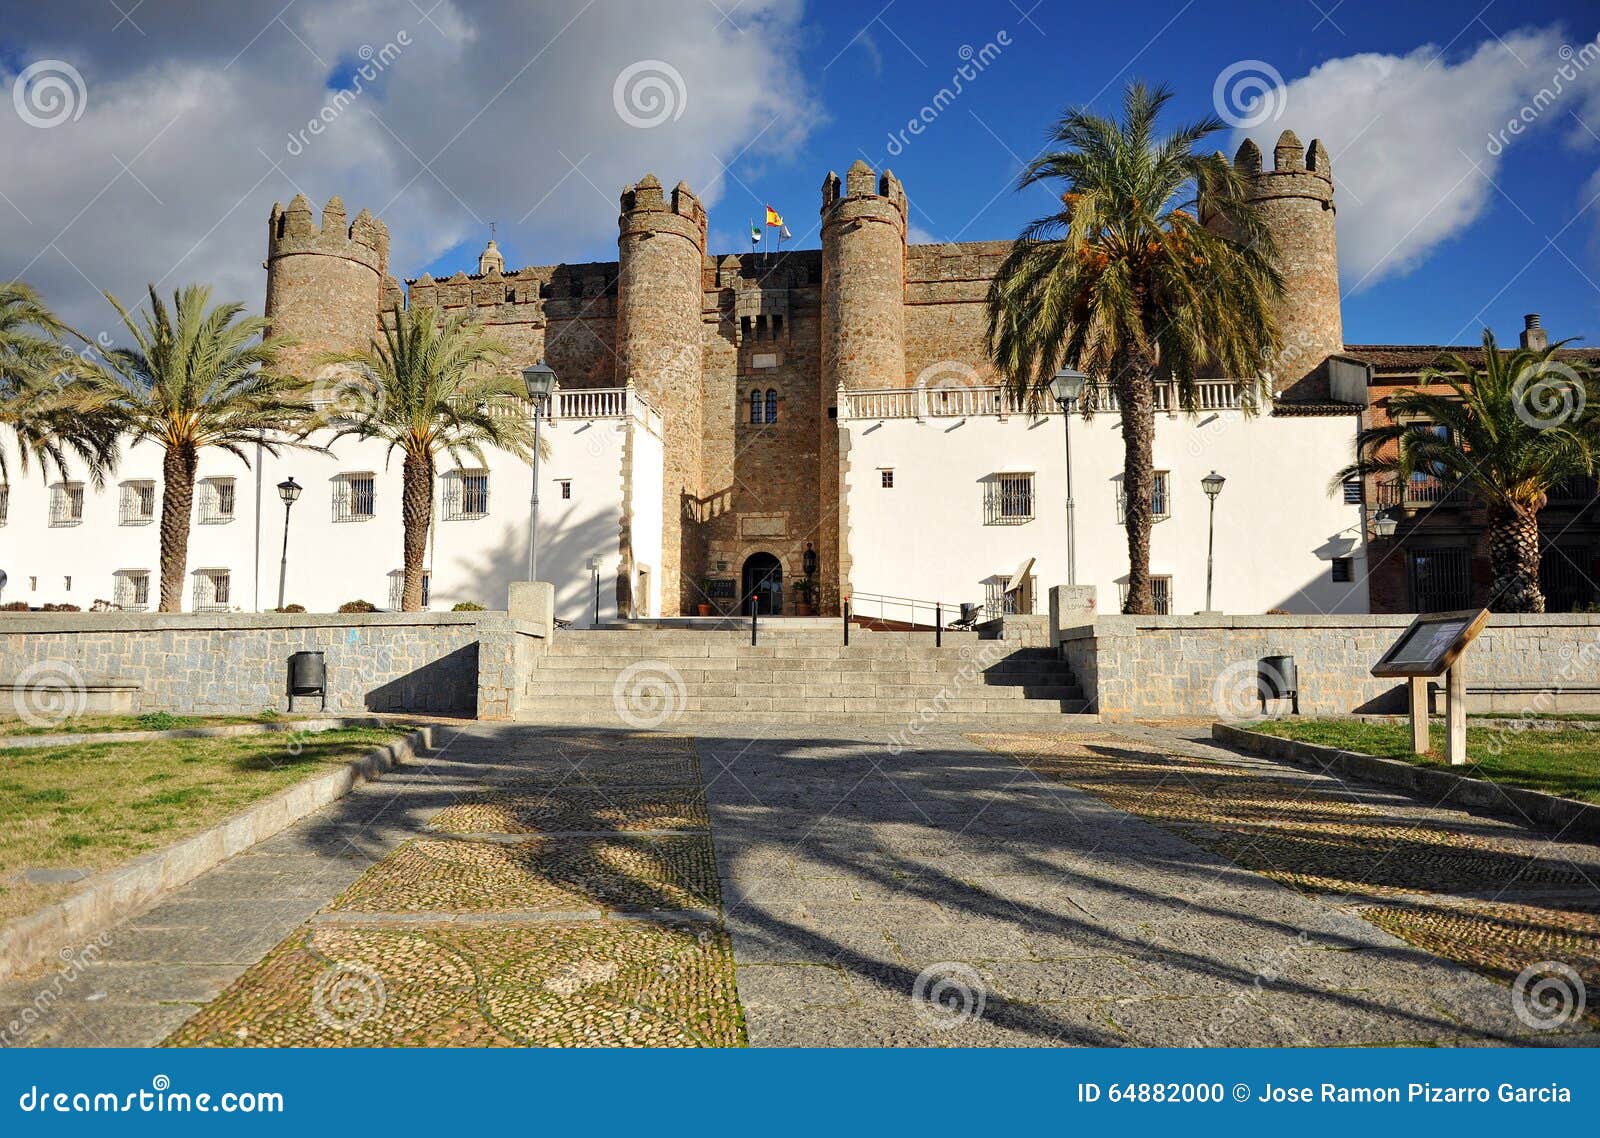 castle of the dukes of feria, zafra, extremadura, spain